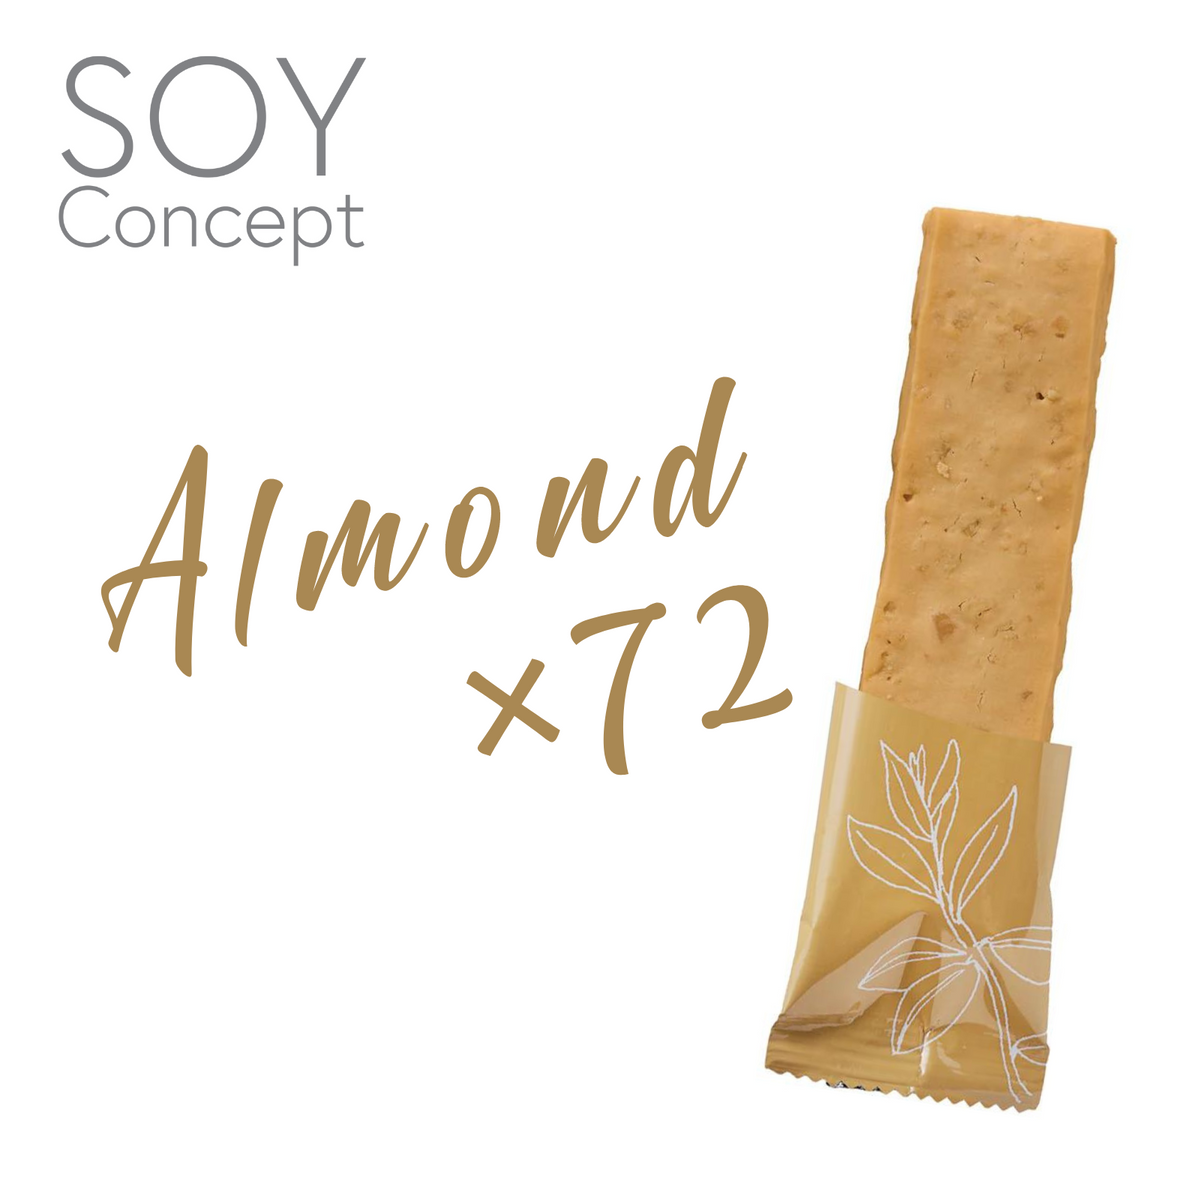 SOY Concept Almond Almond value set